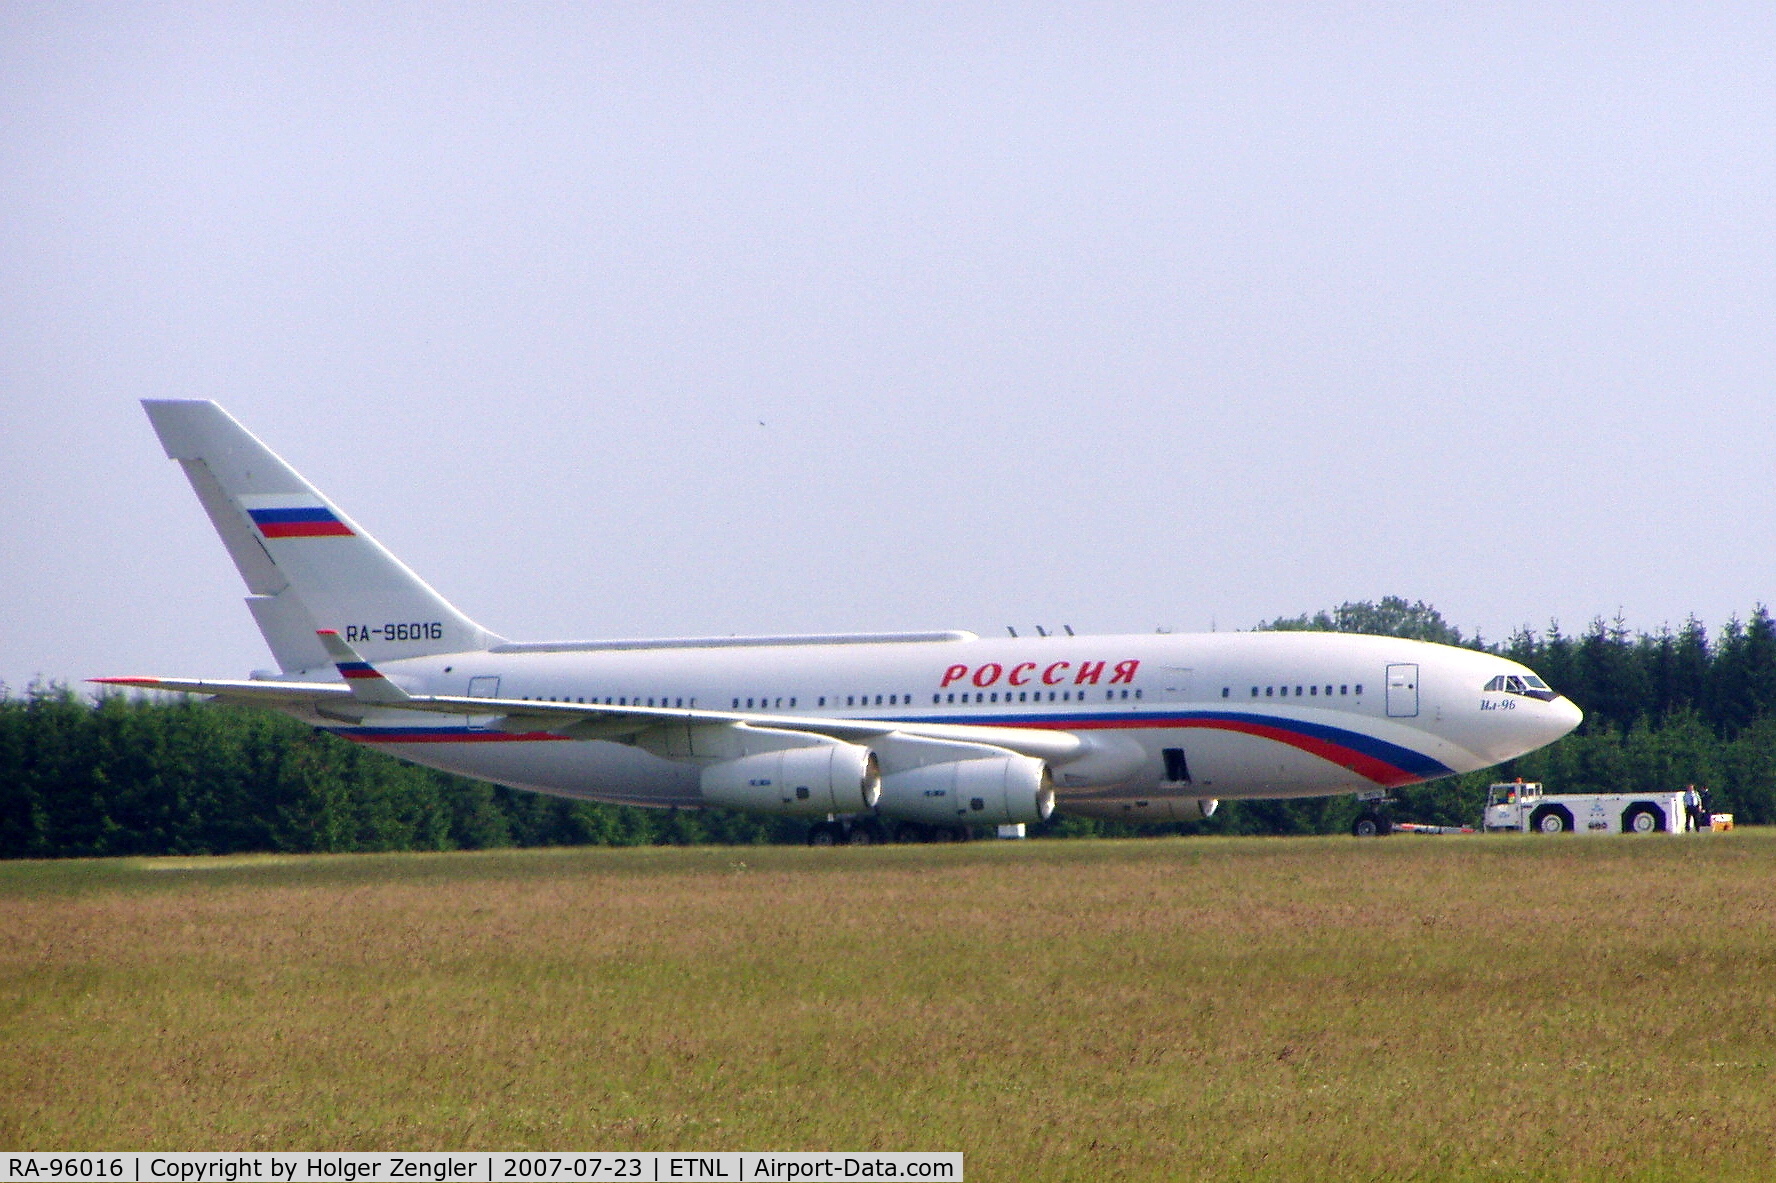 RA-96016, 2004 Ilyushin Il-96-300 C/N 74393202010, Russia´s No. 1